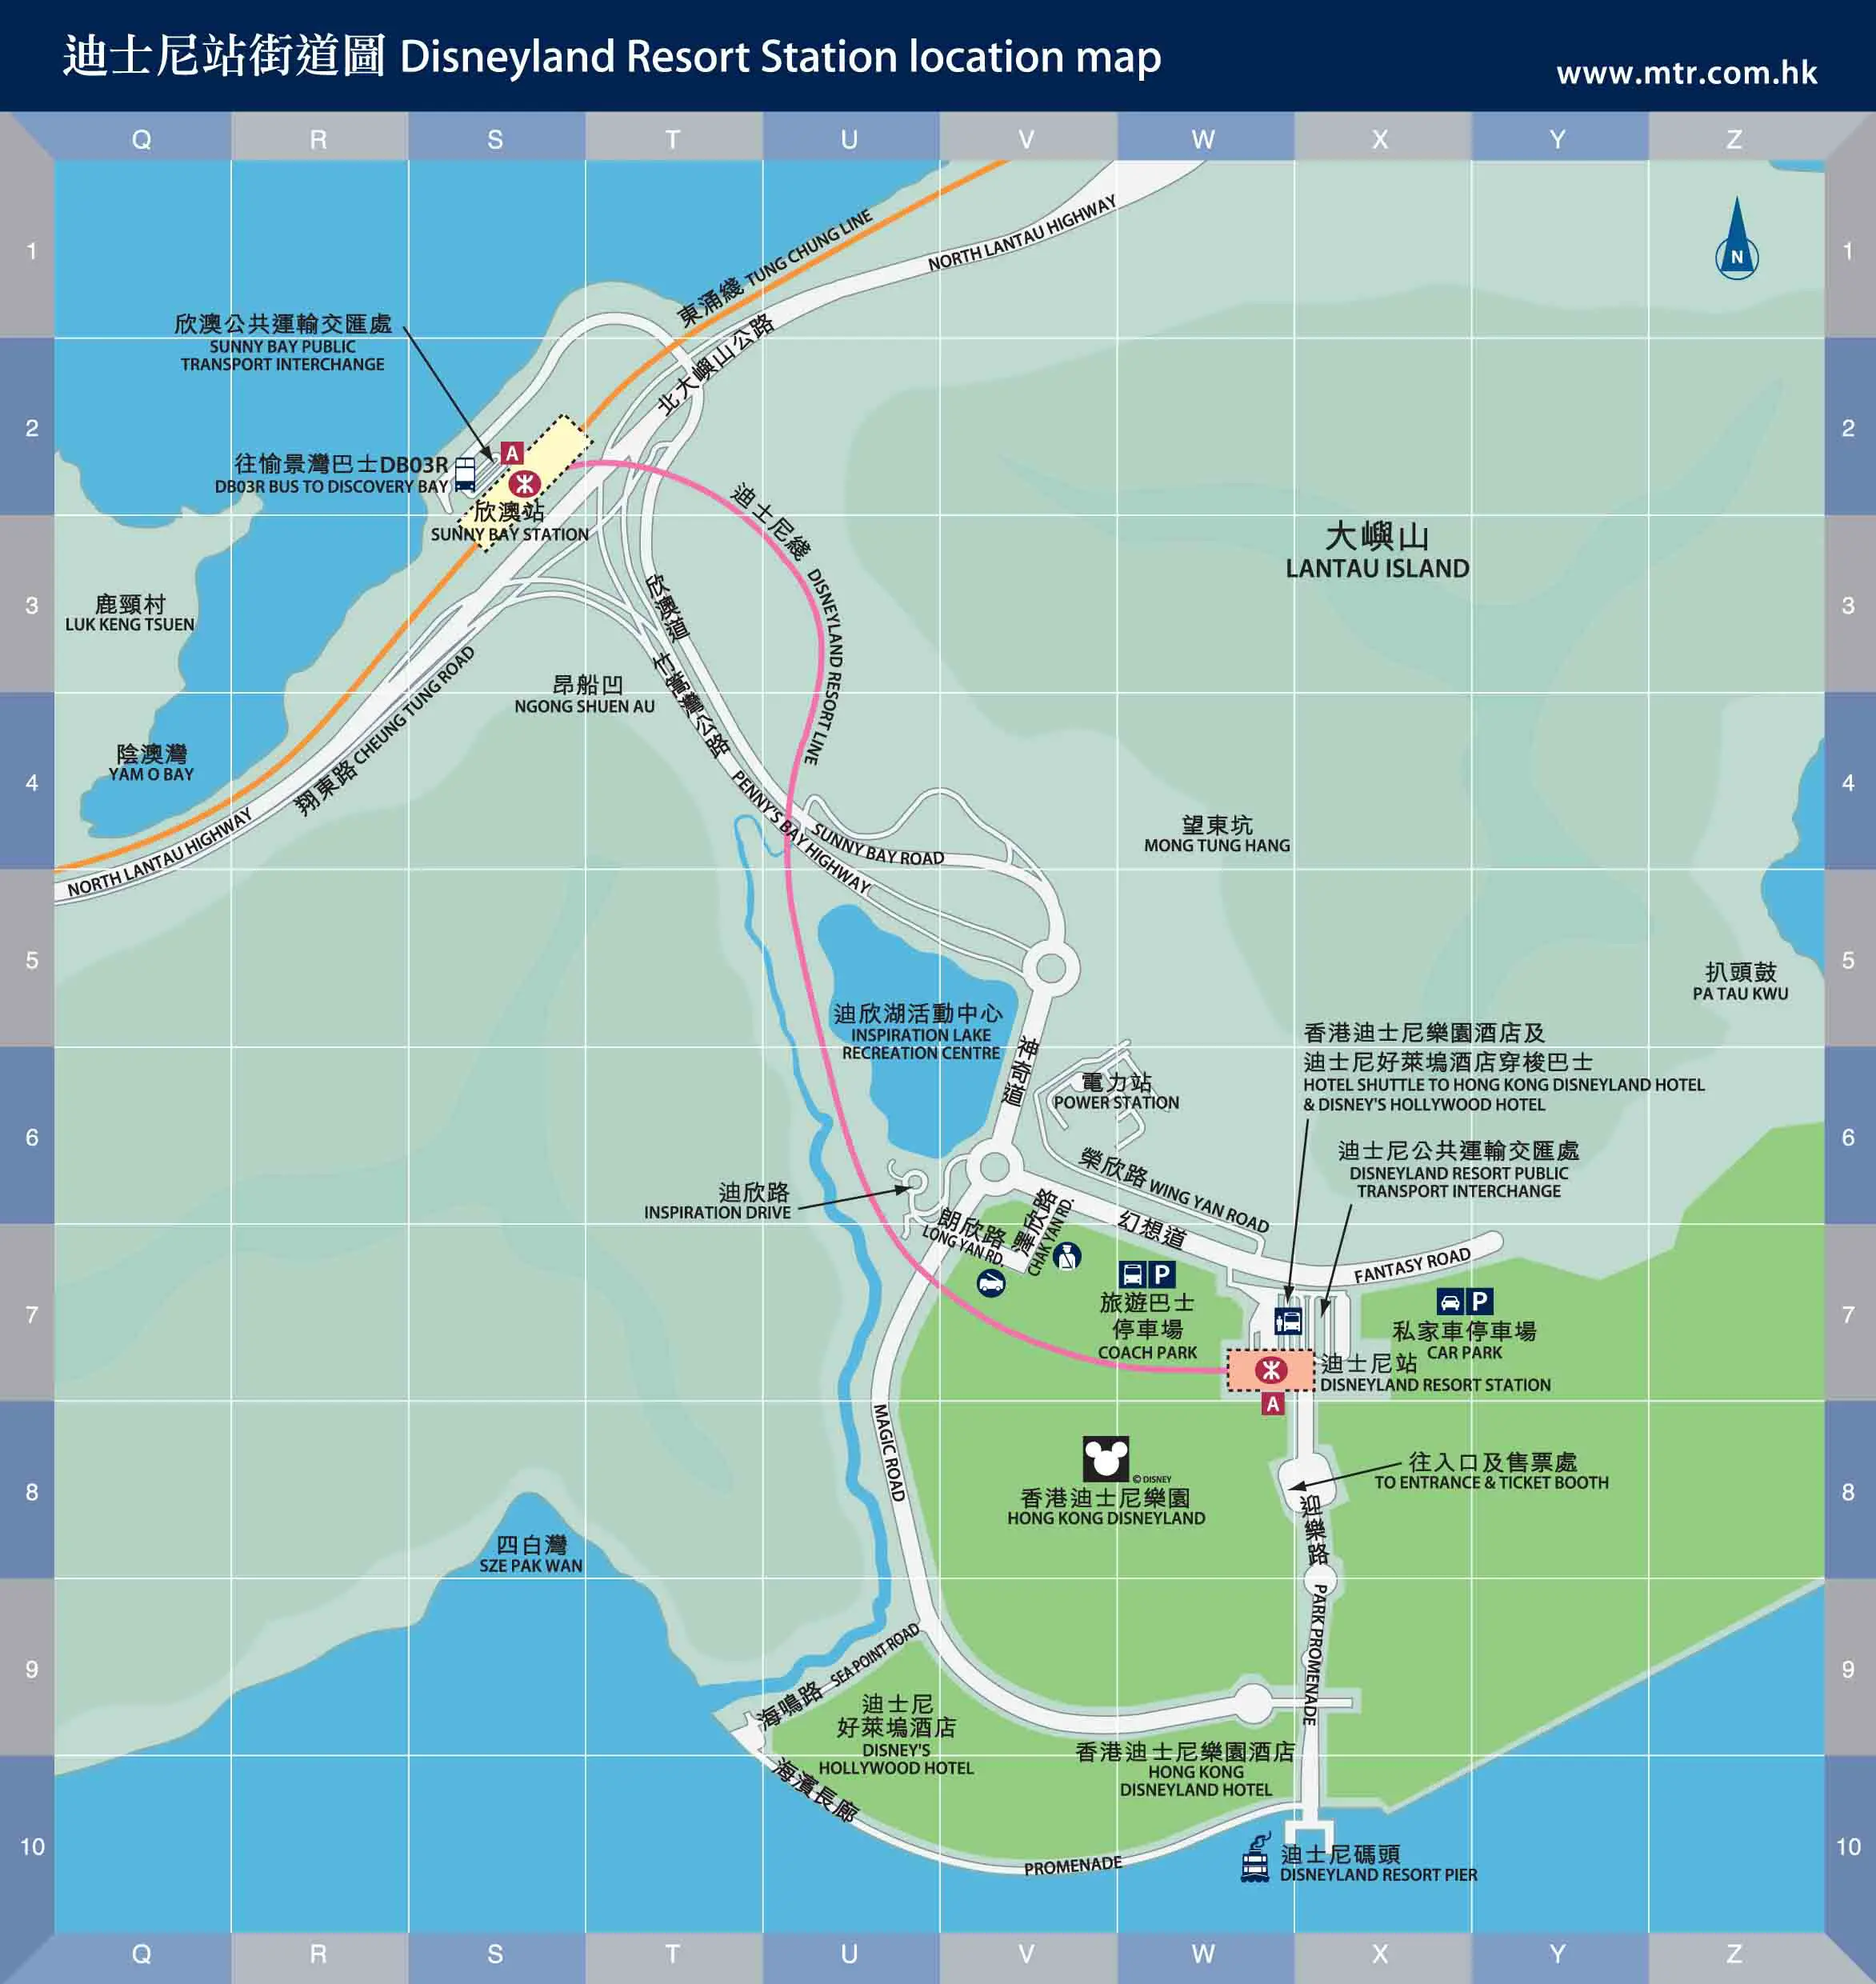 Lantau Island: Disneyland MTR station area map 2012-2013